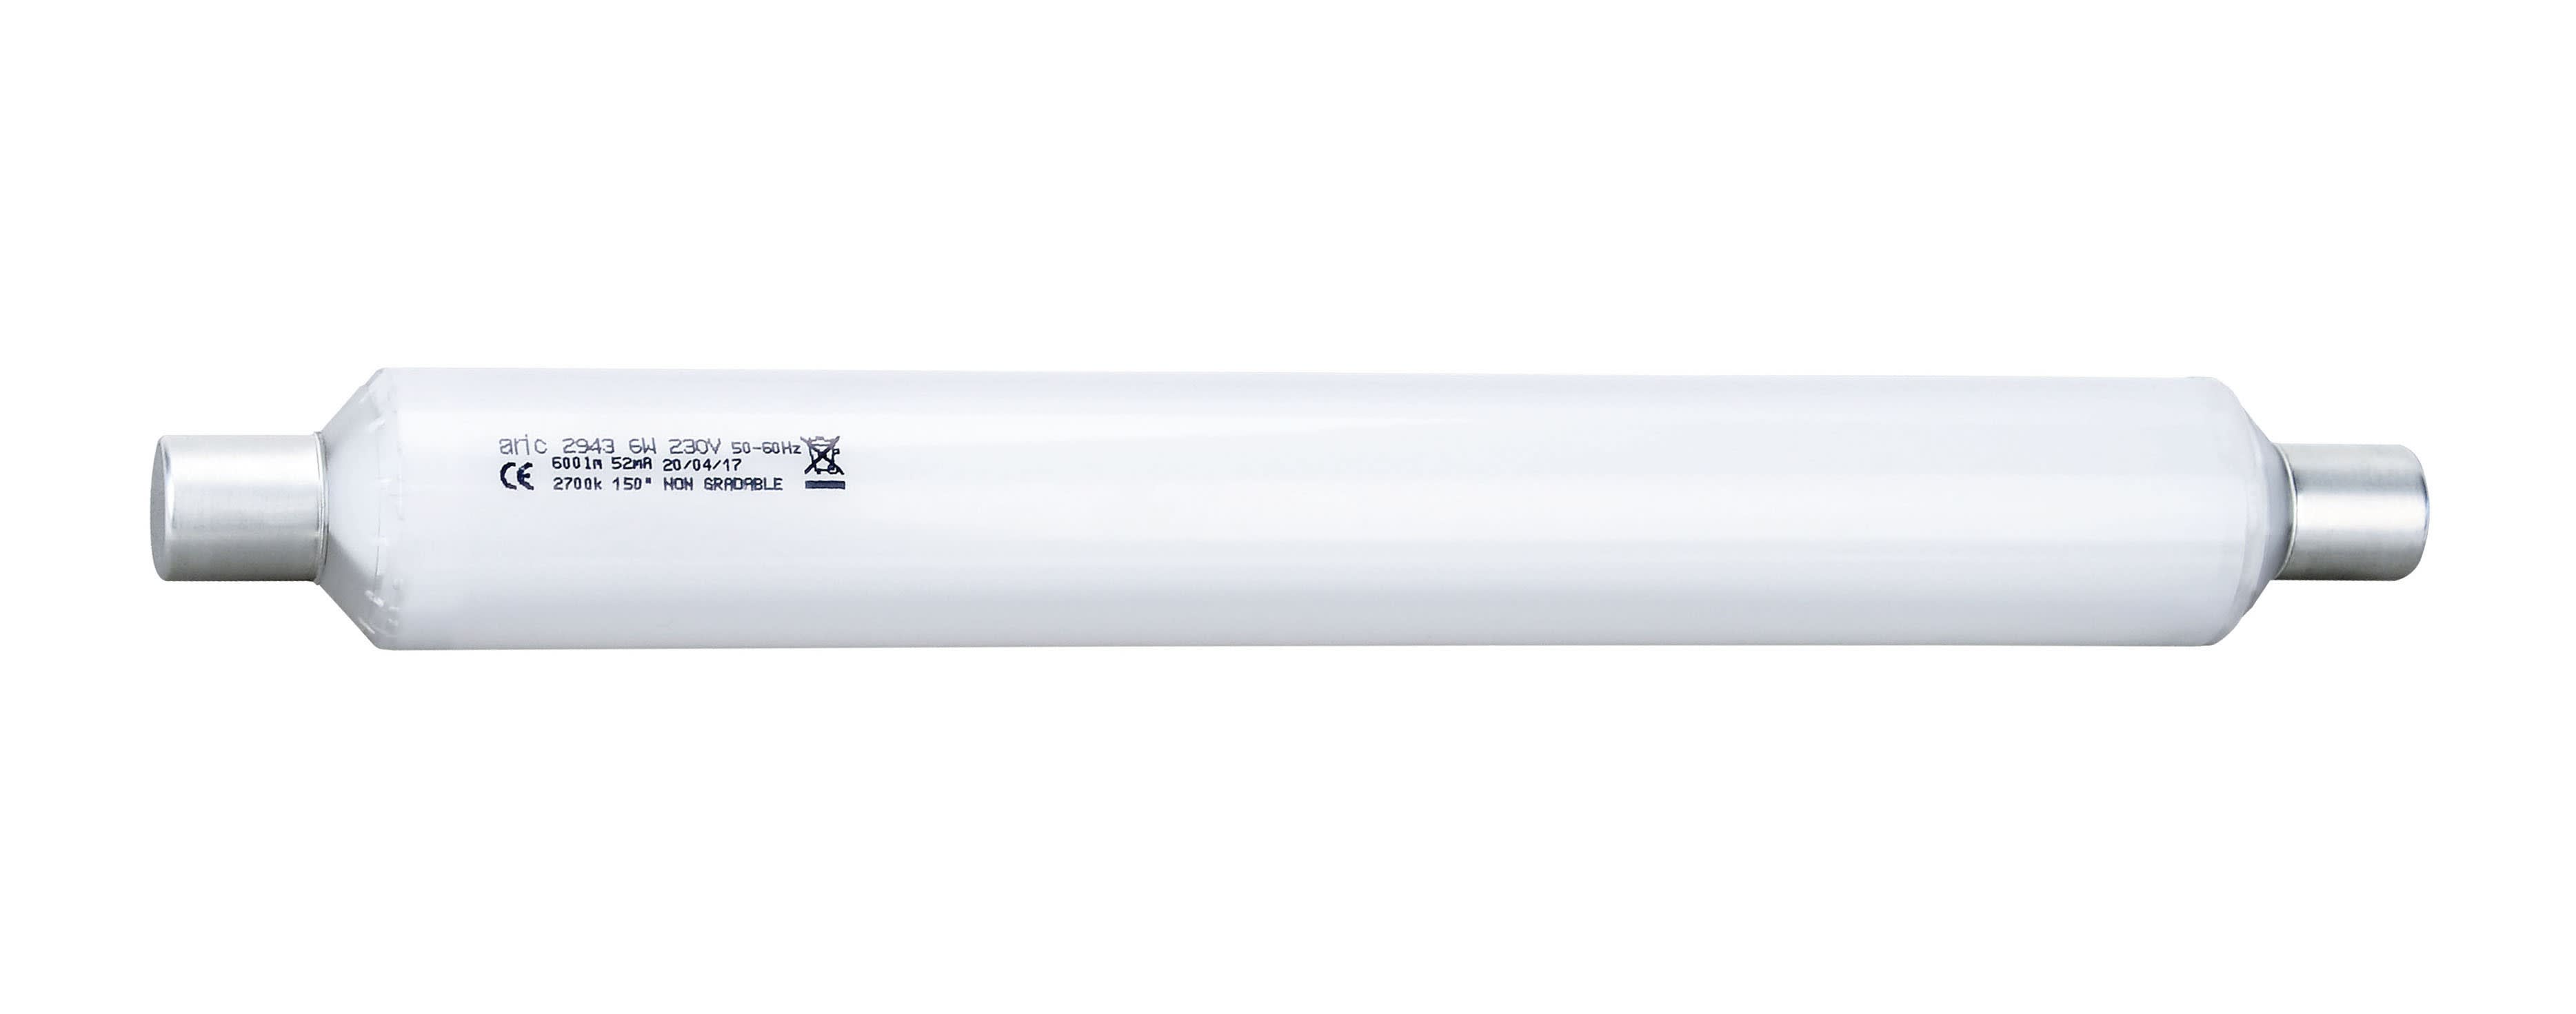 Aric - Lampe linolite S19, LED 7,2W 2700K 650lm, 20000H, Cl.energ. ErP 2021 =F